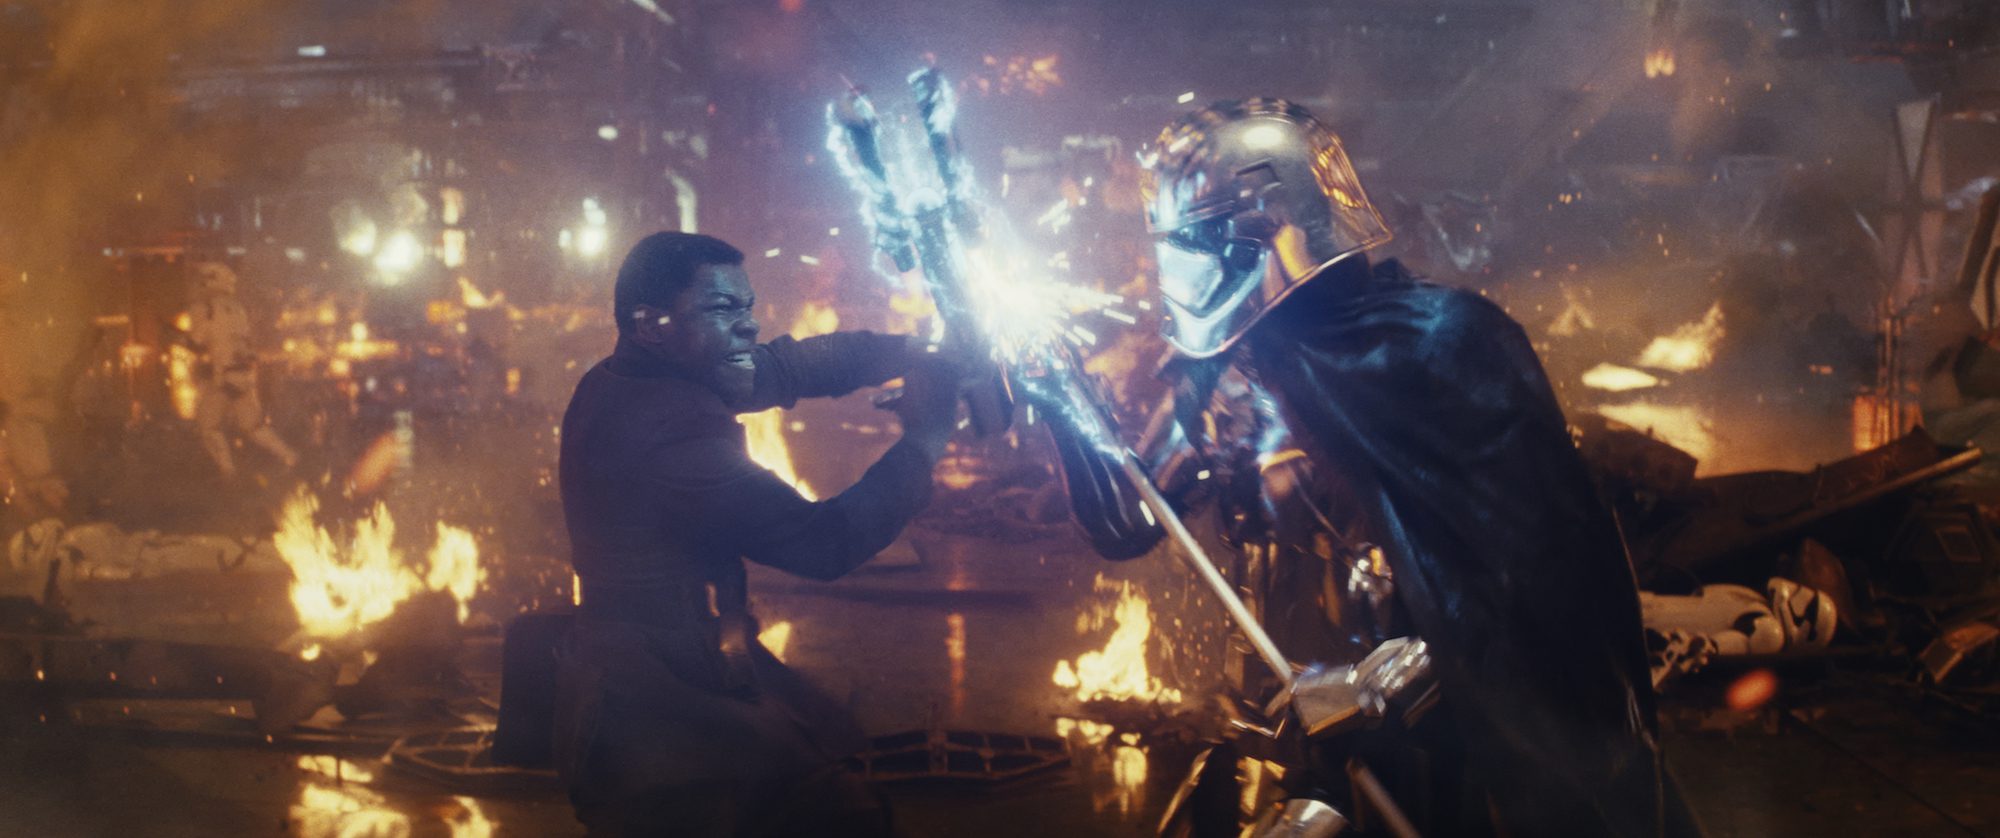 Finn (John Boyega) battling Captain Phasma (Gwendoline Christie) in "Star Wars: The Last Jedi" (Walt Disney Pictures)